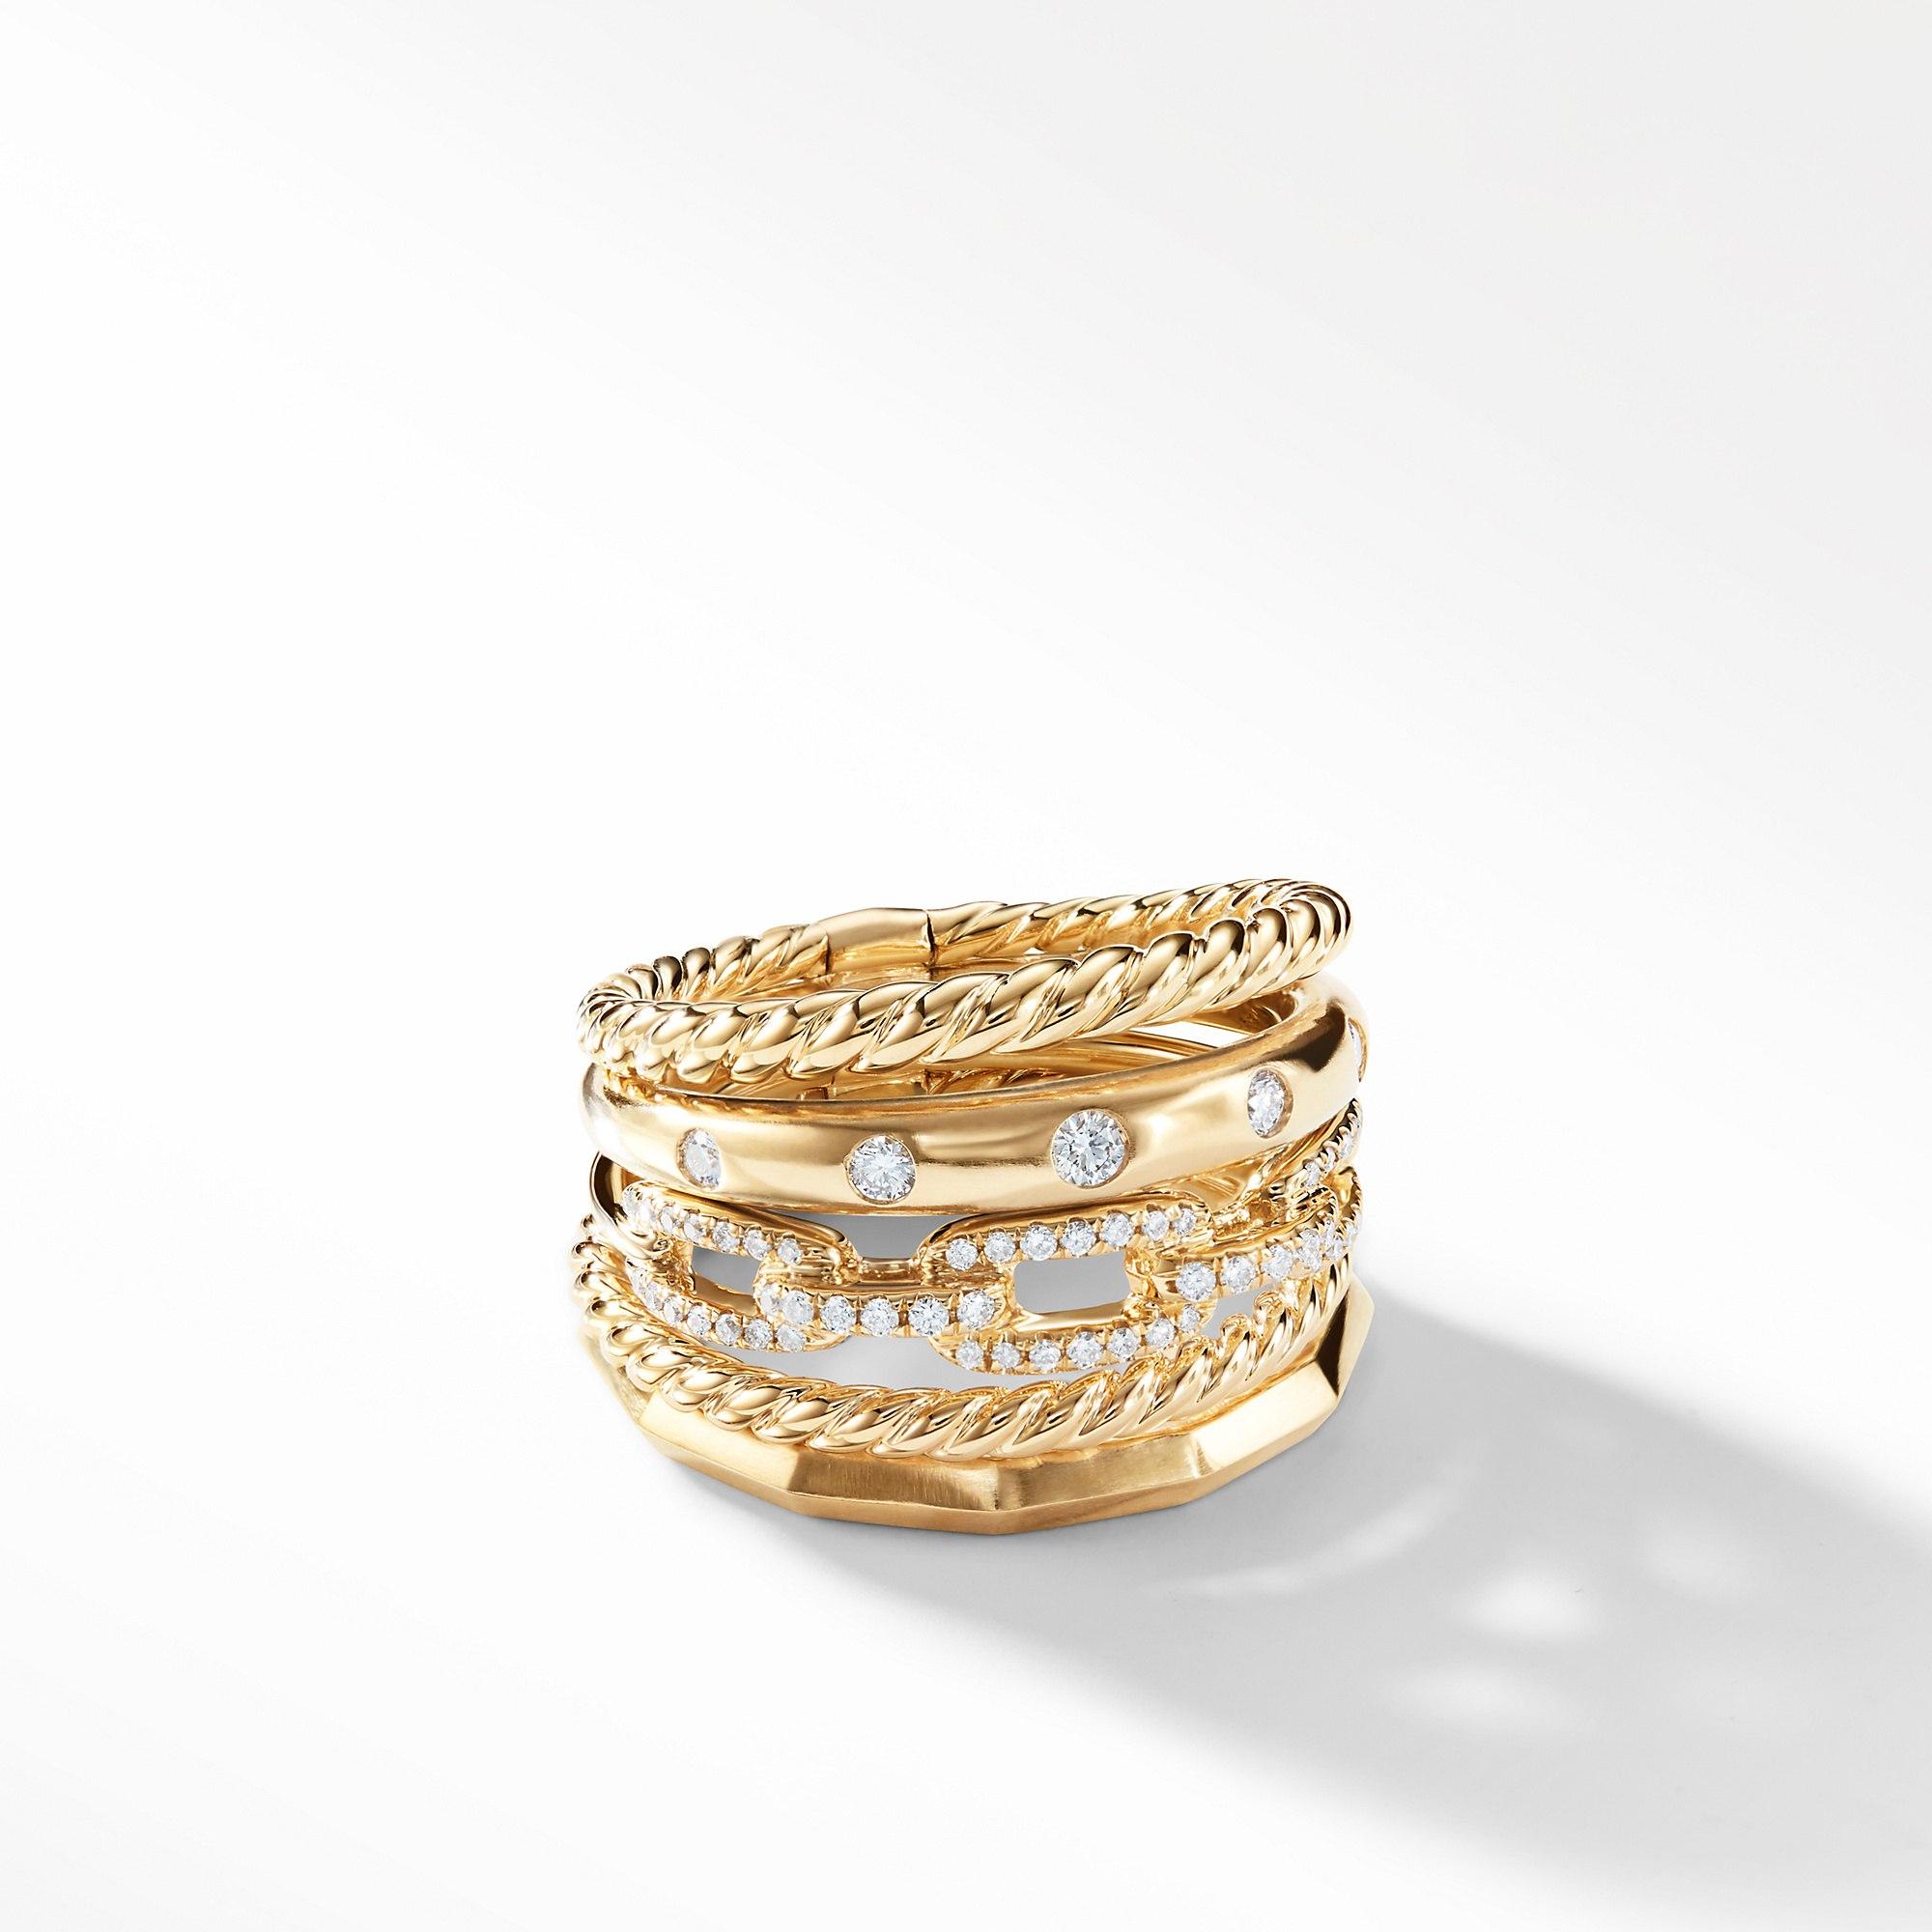 David Yurman Stax 5 Row Ring with Diamonds in 18k Yellow Gold, size 7.5